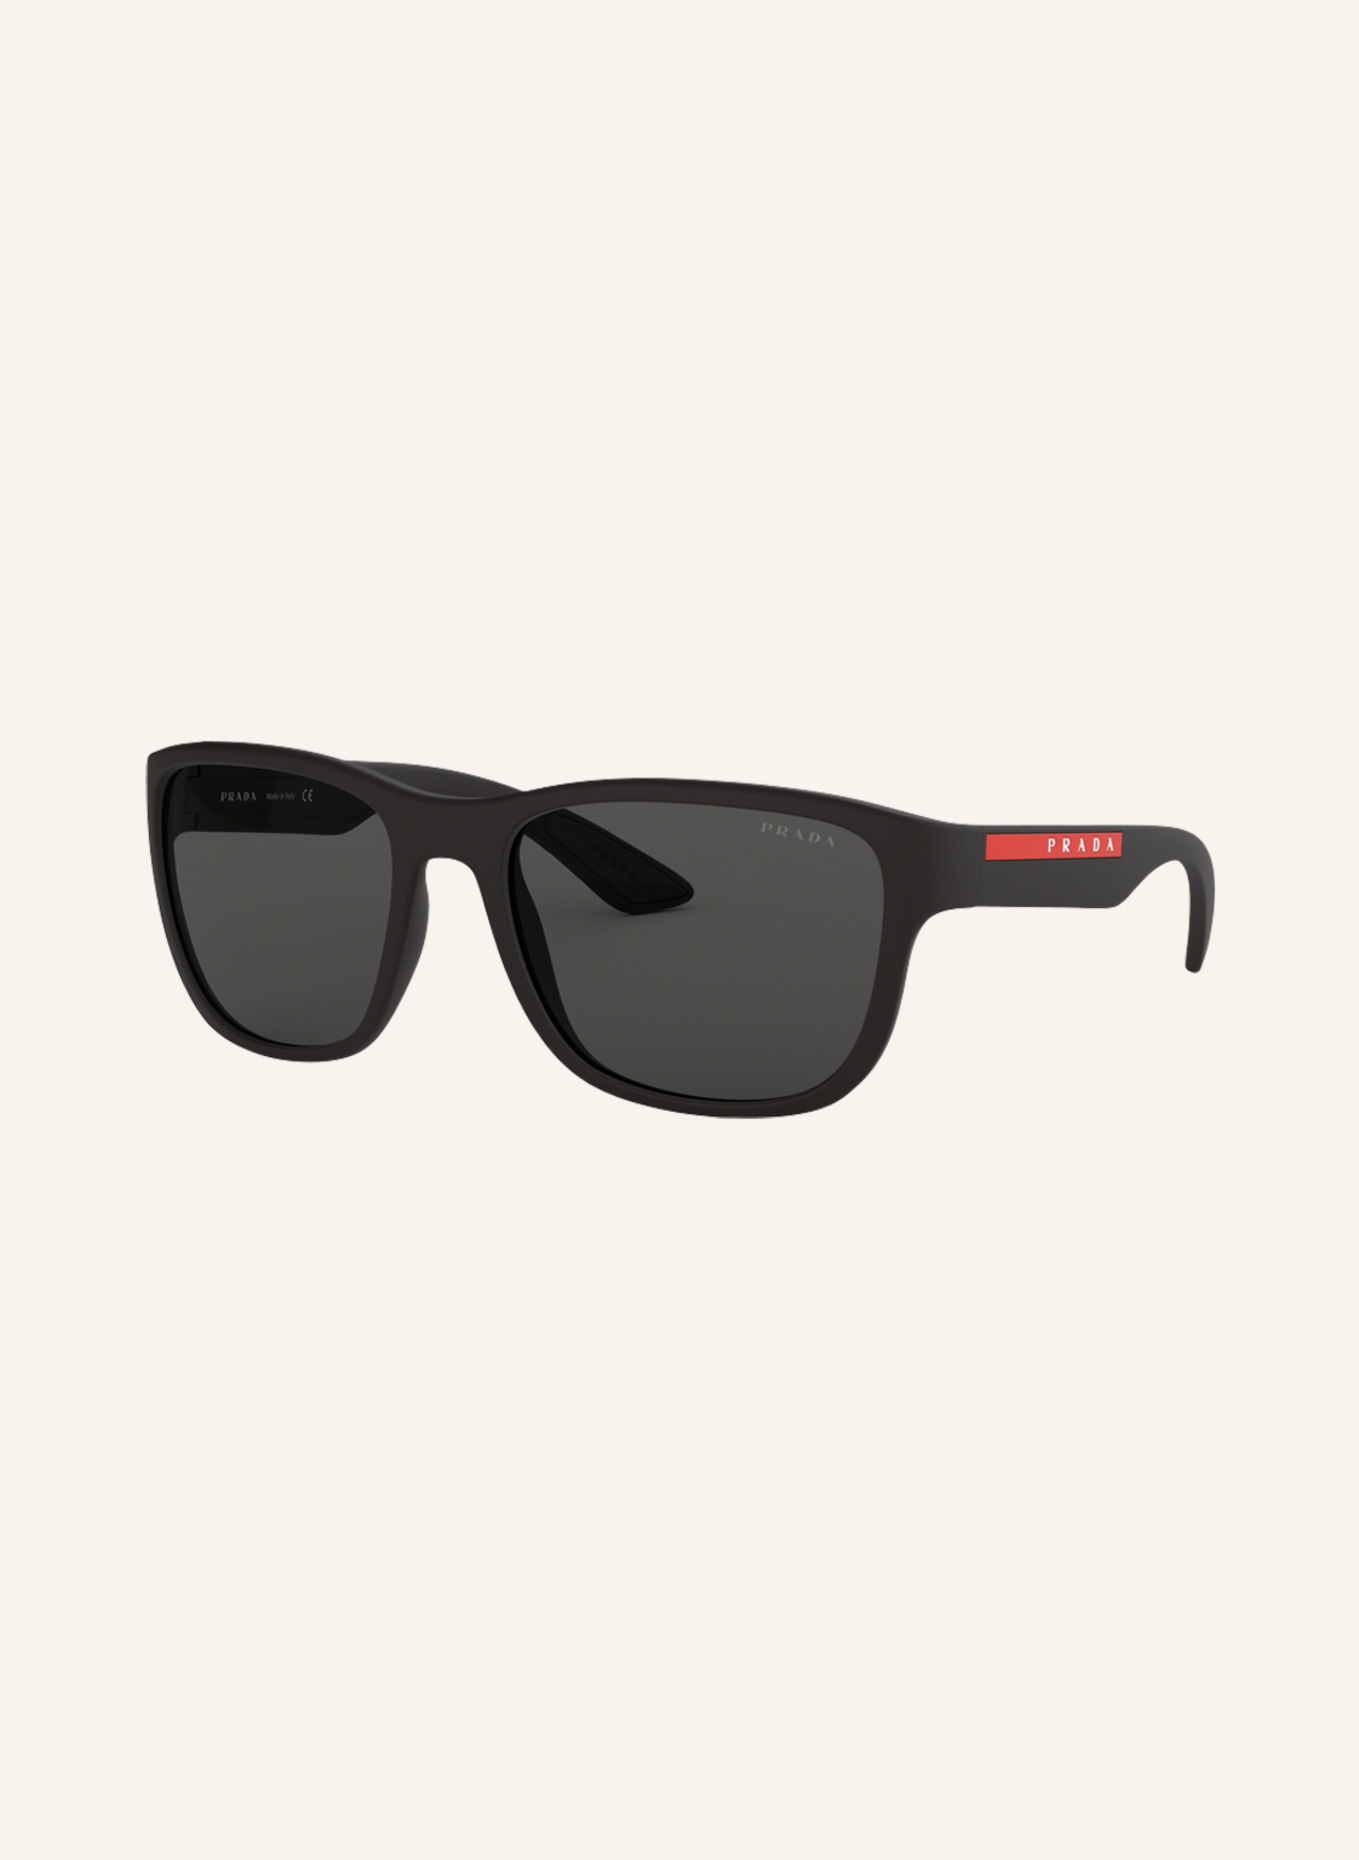 PRADA Sunglasses PS 01US in dg05s0 - black/ gray | Breuninger